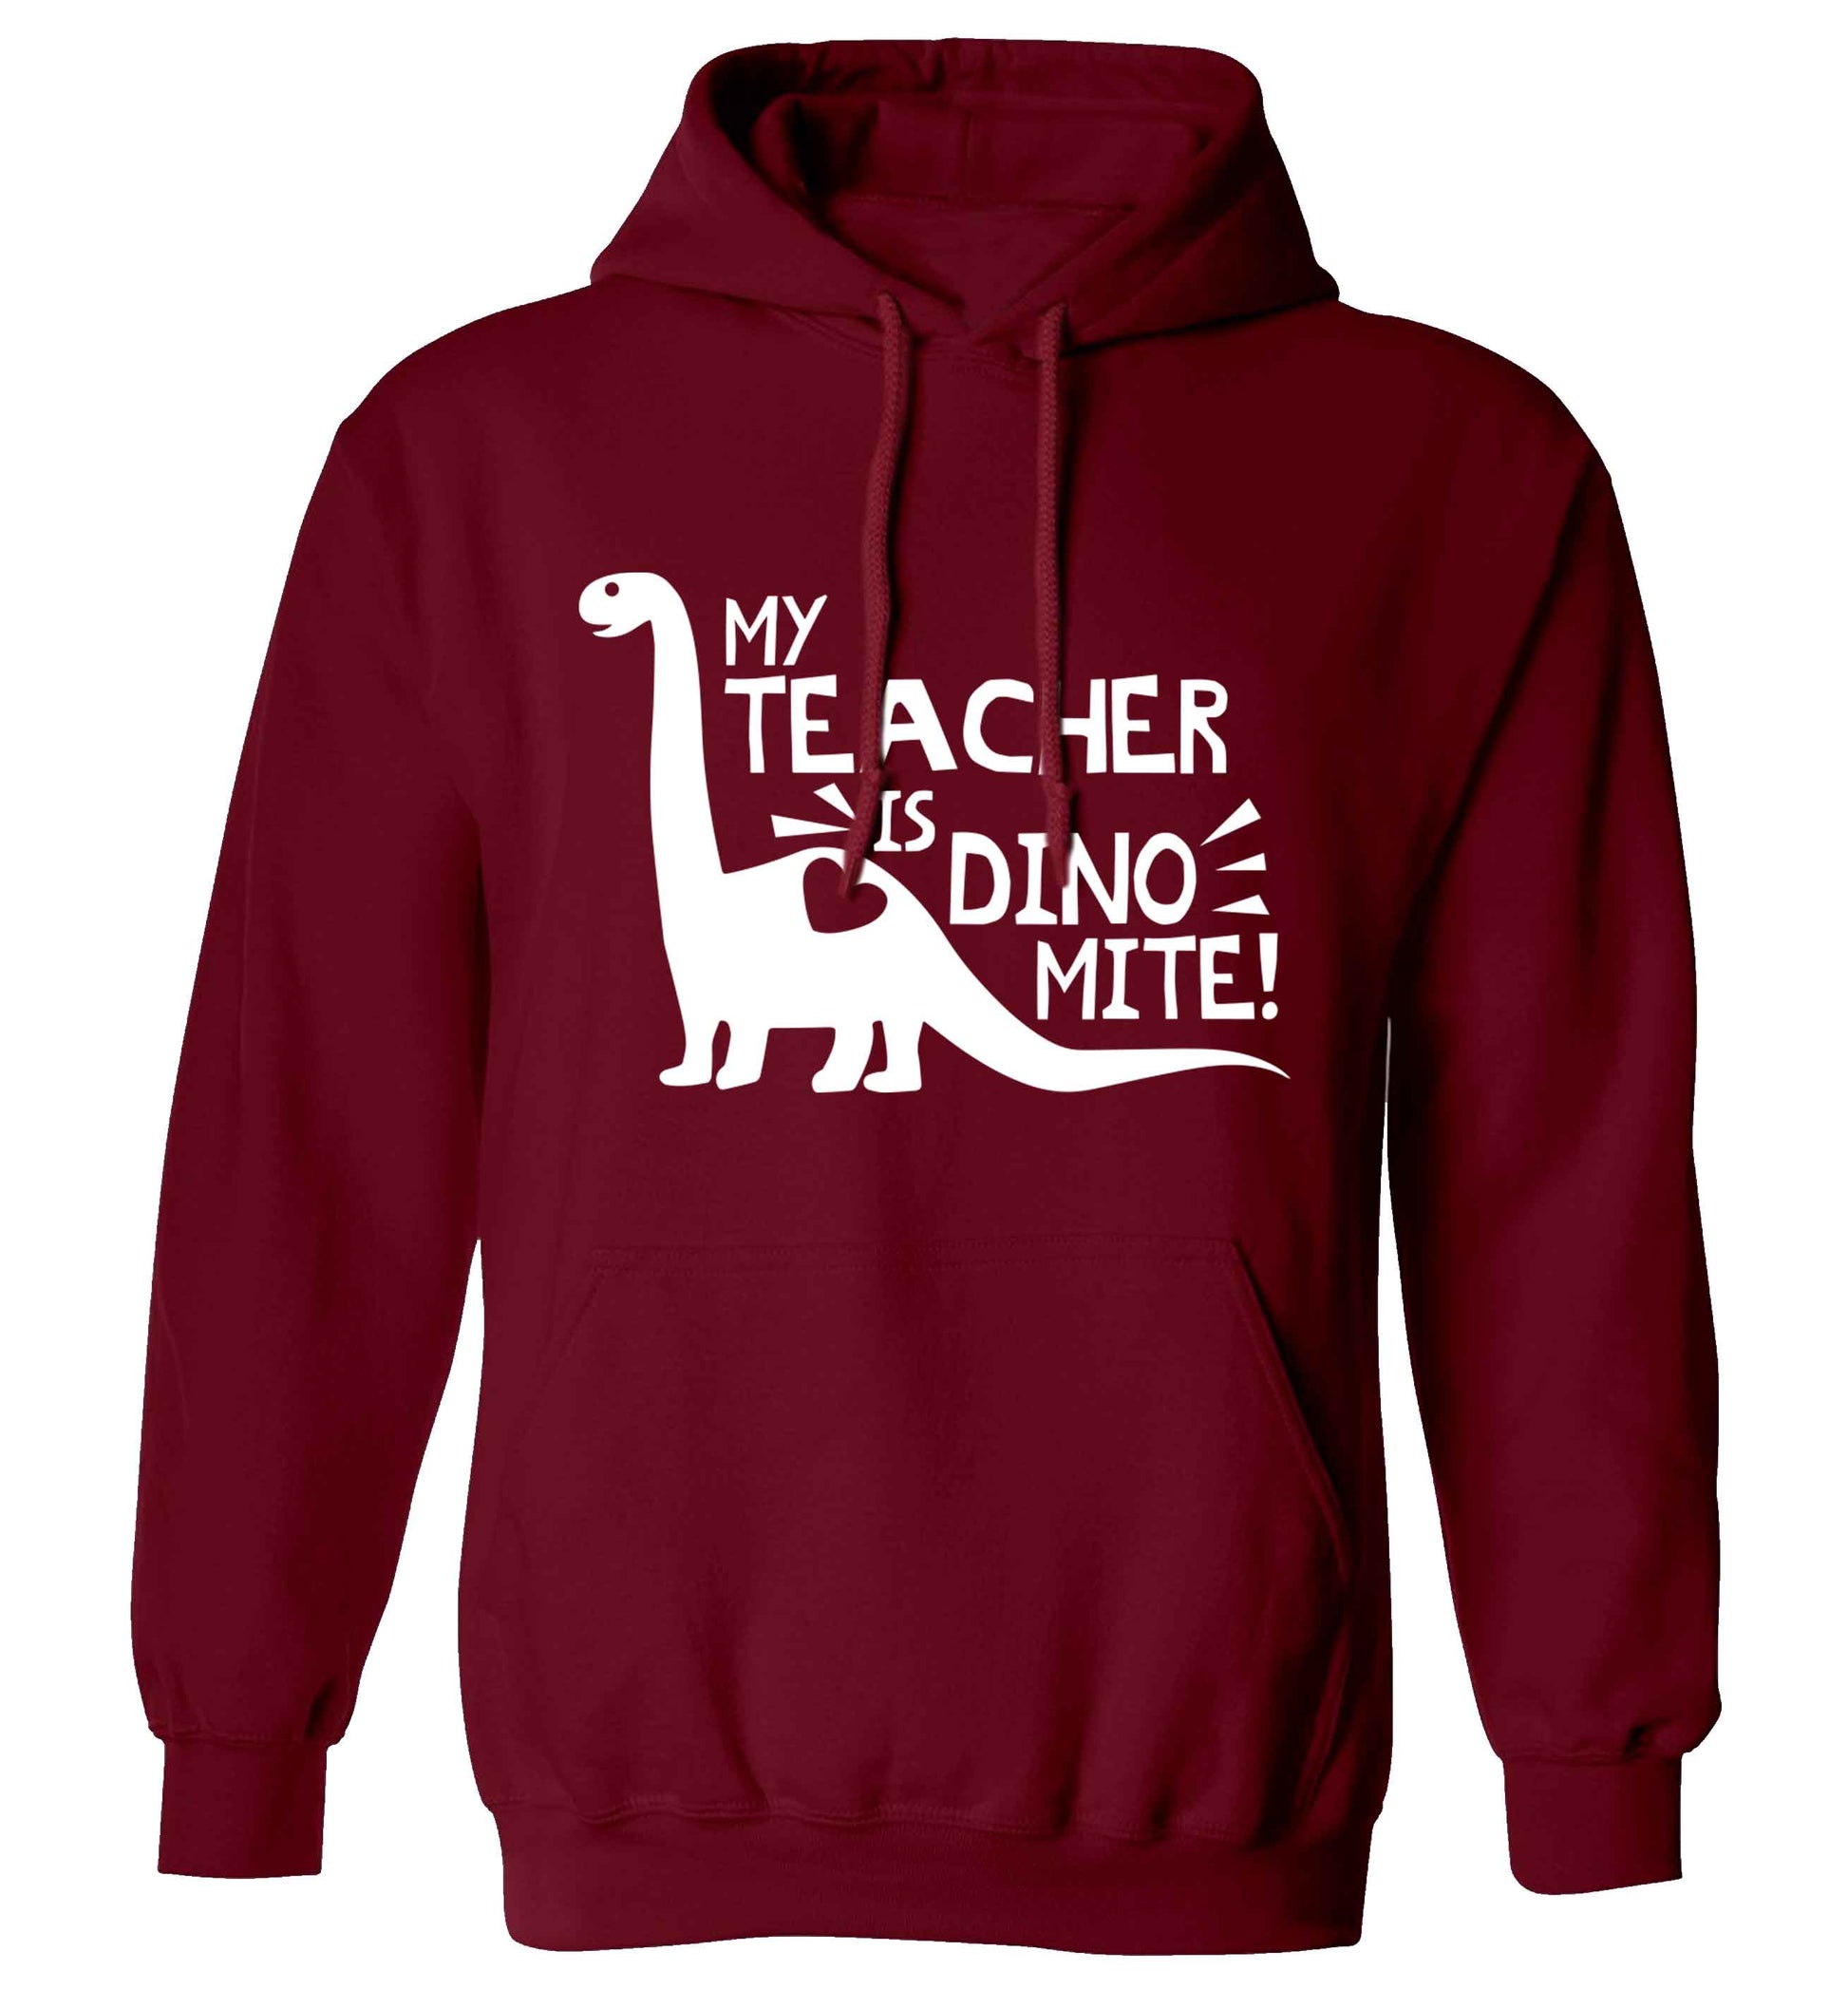 My teacher is dinomite! adults unisex maroon hoodie 2XL